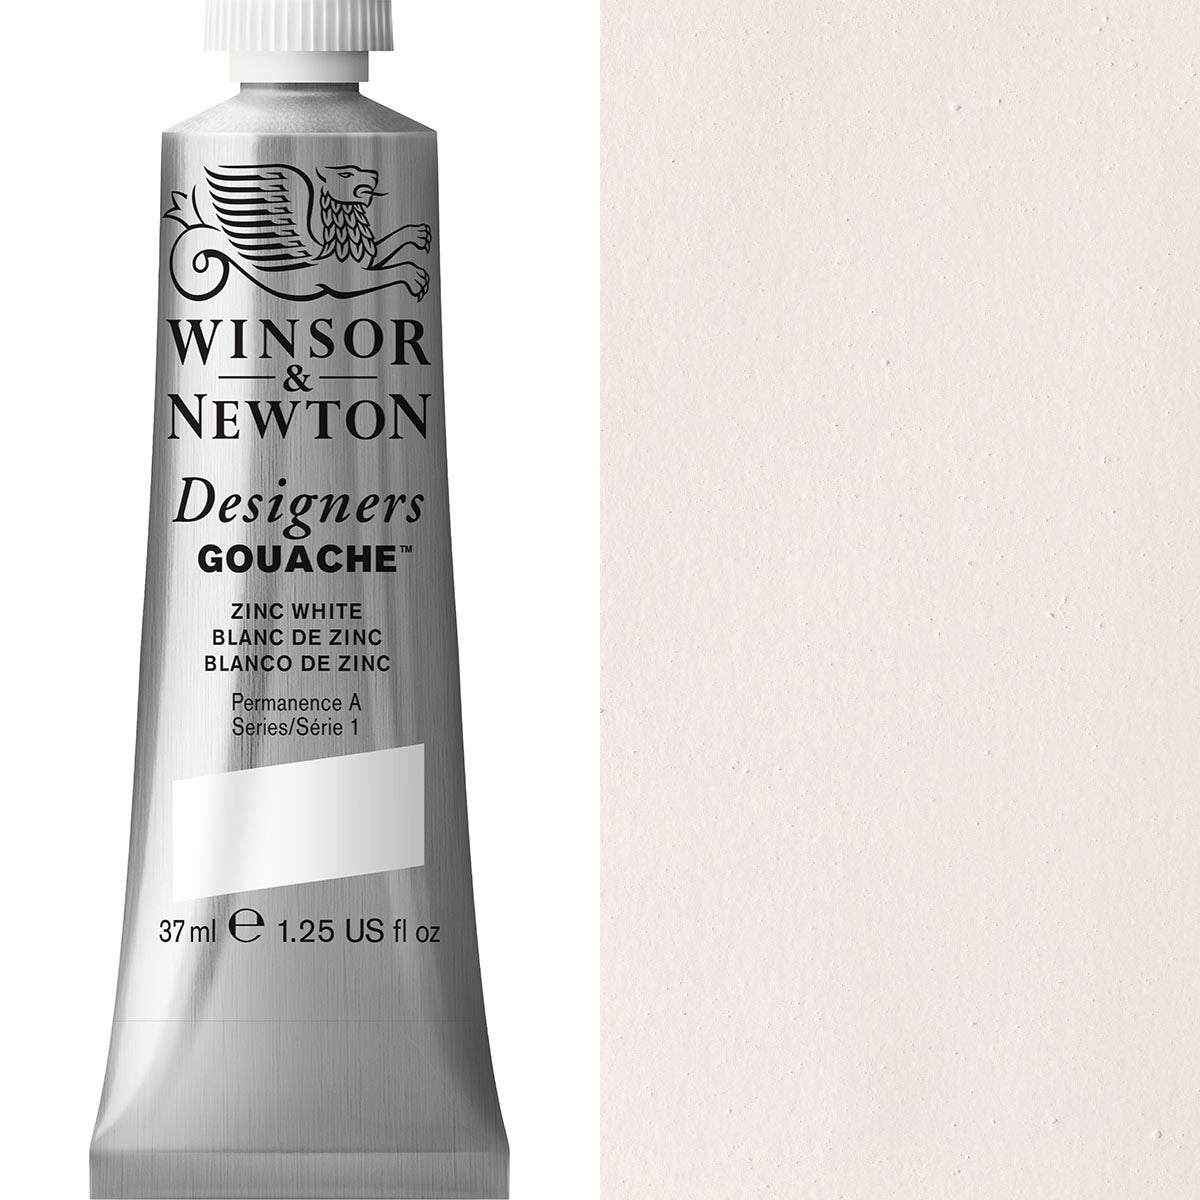 Winsor and Newton - Designers Gouache - 37ml - Zinc White